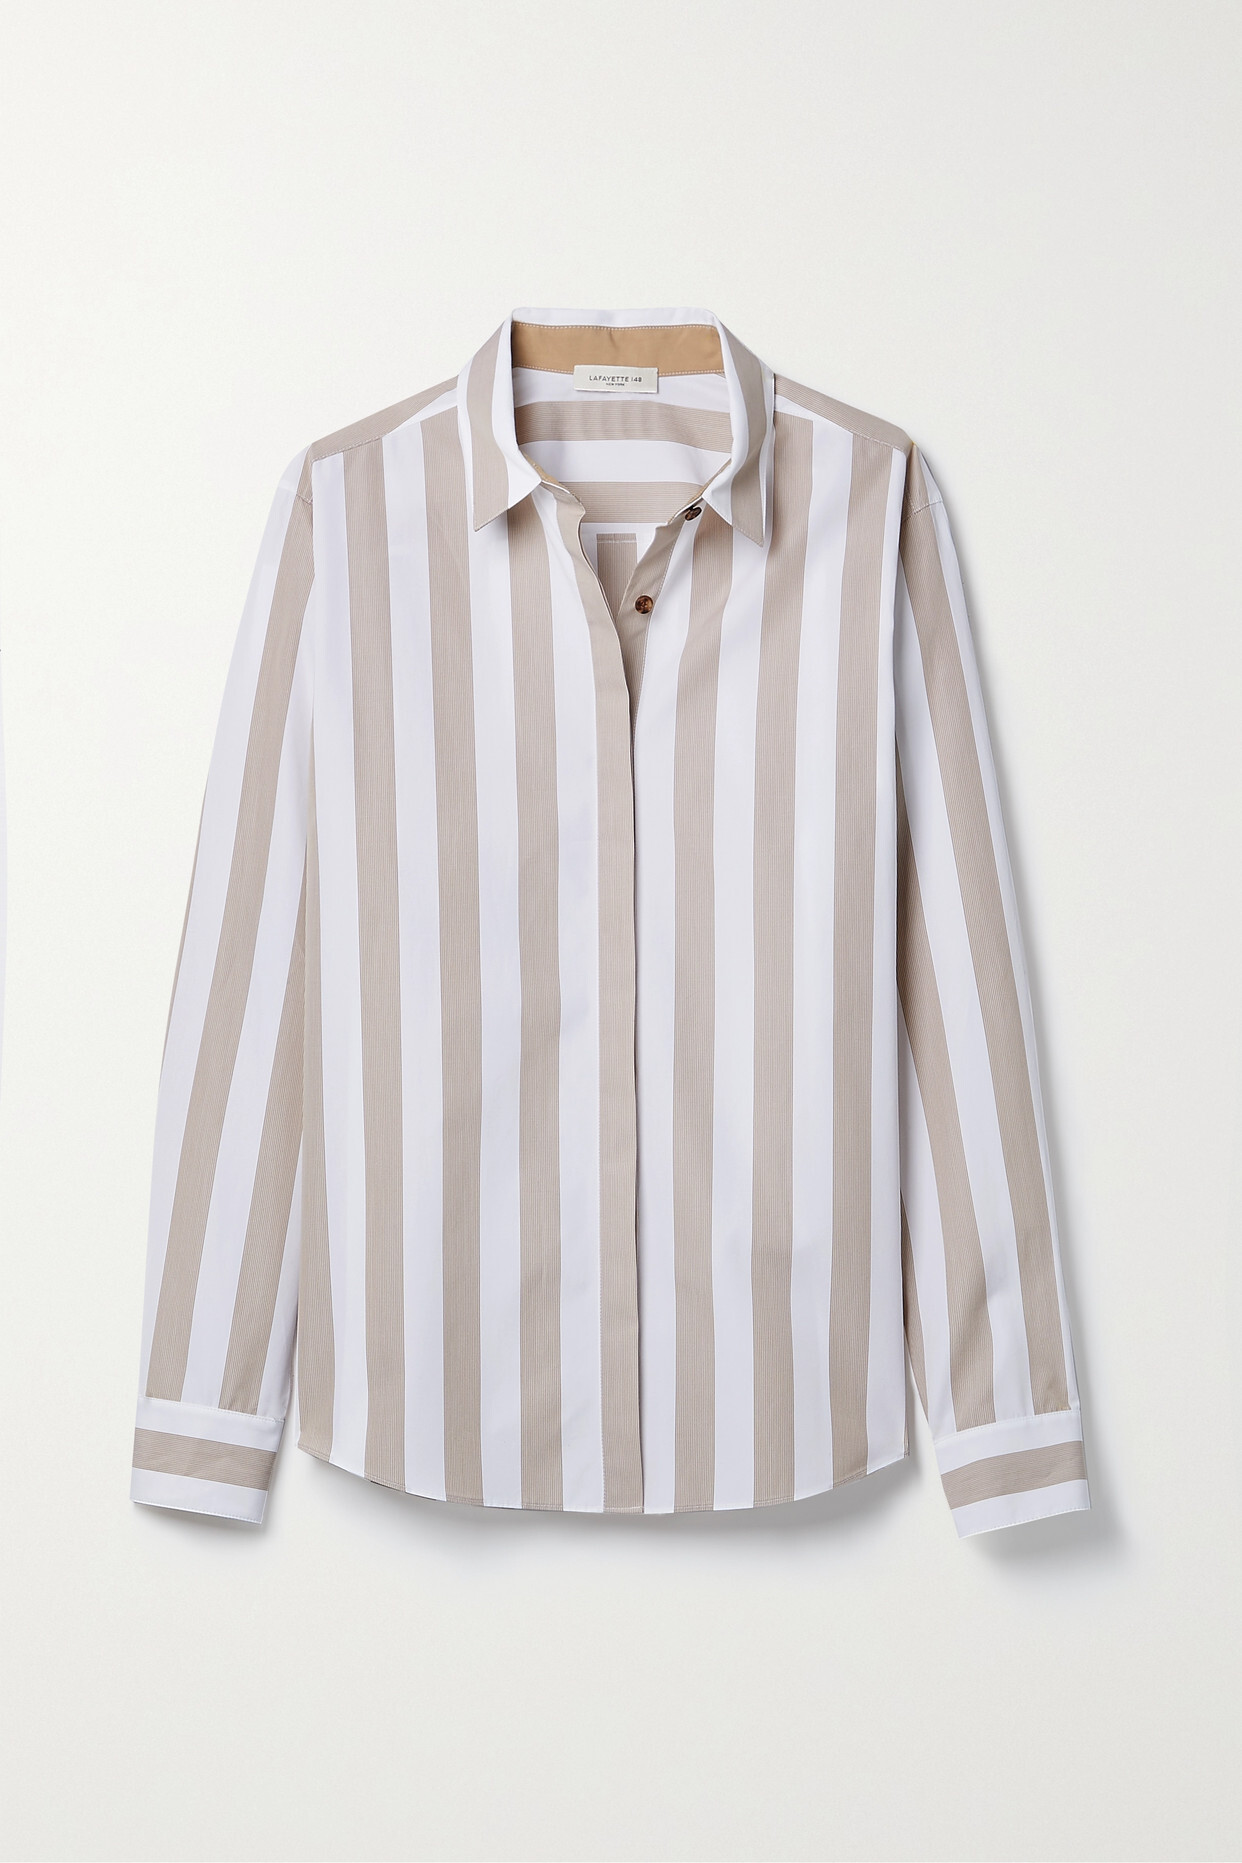 Lafayette148 - Rae Striped Cotton-poplin Shirt - Neutrals